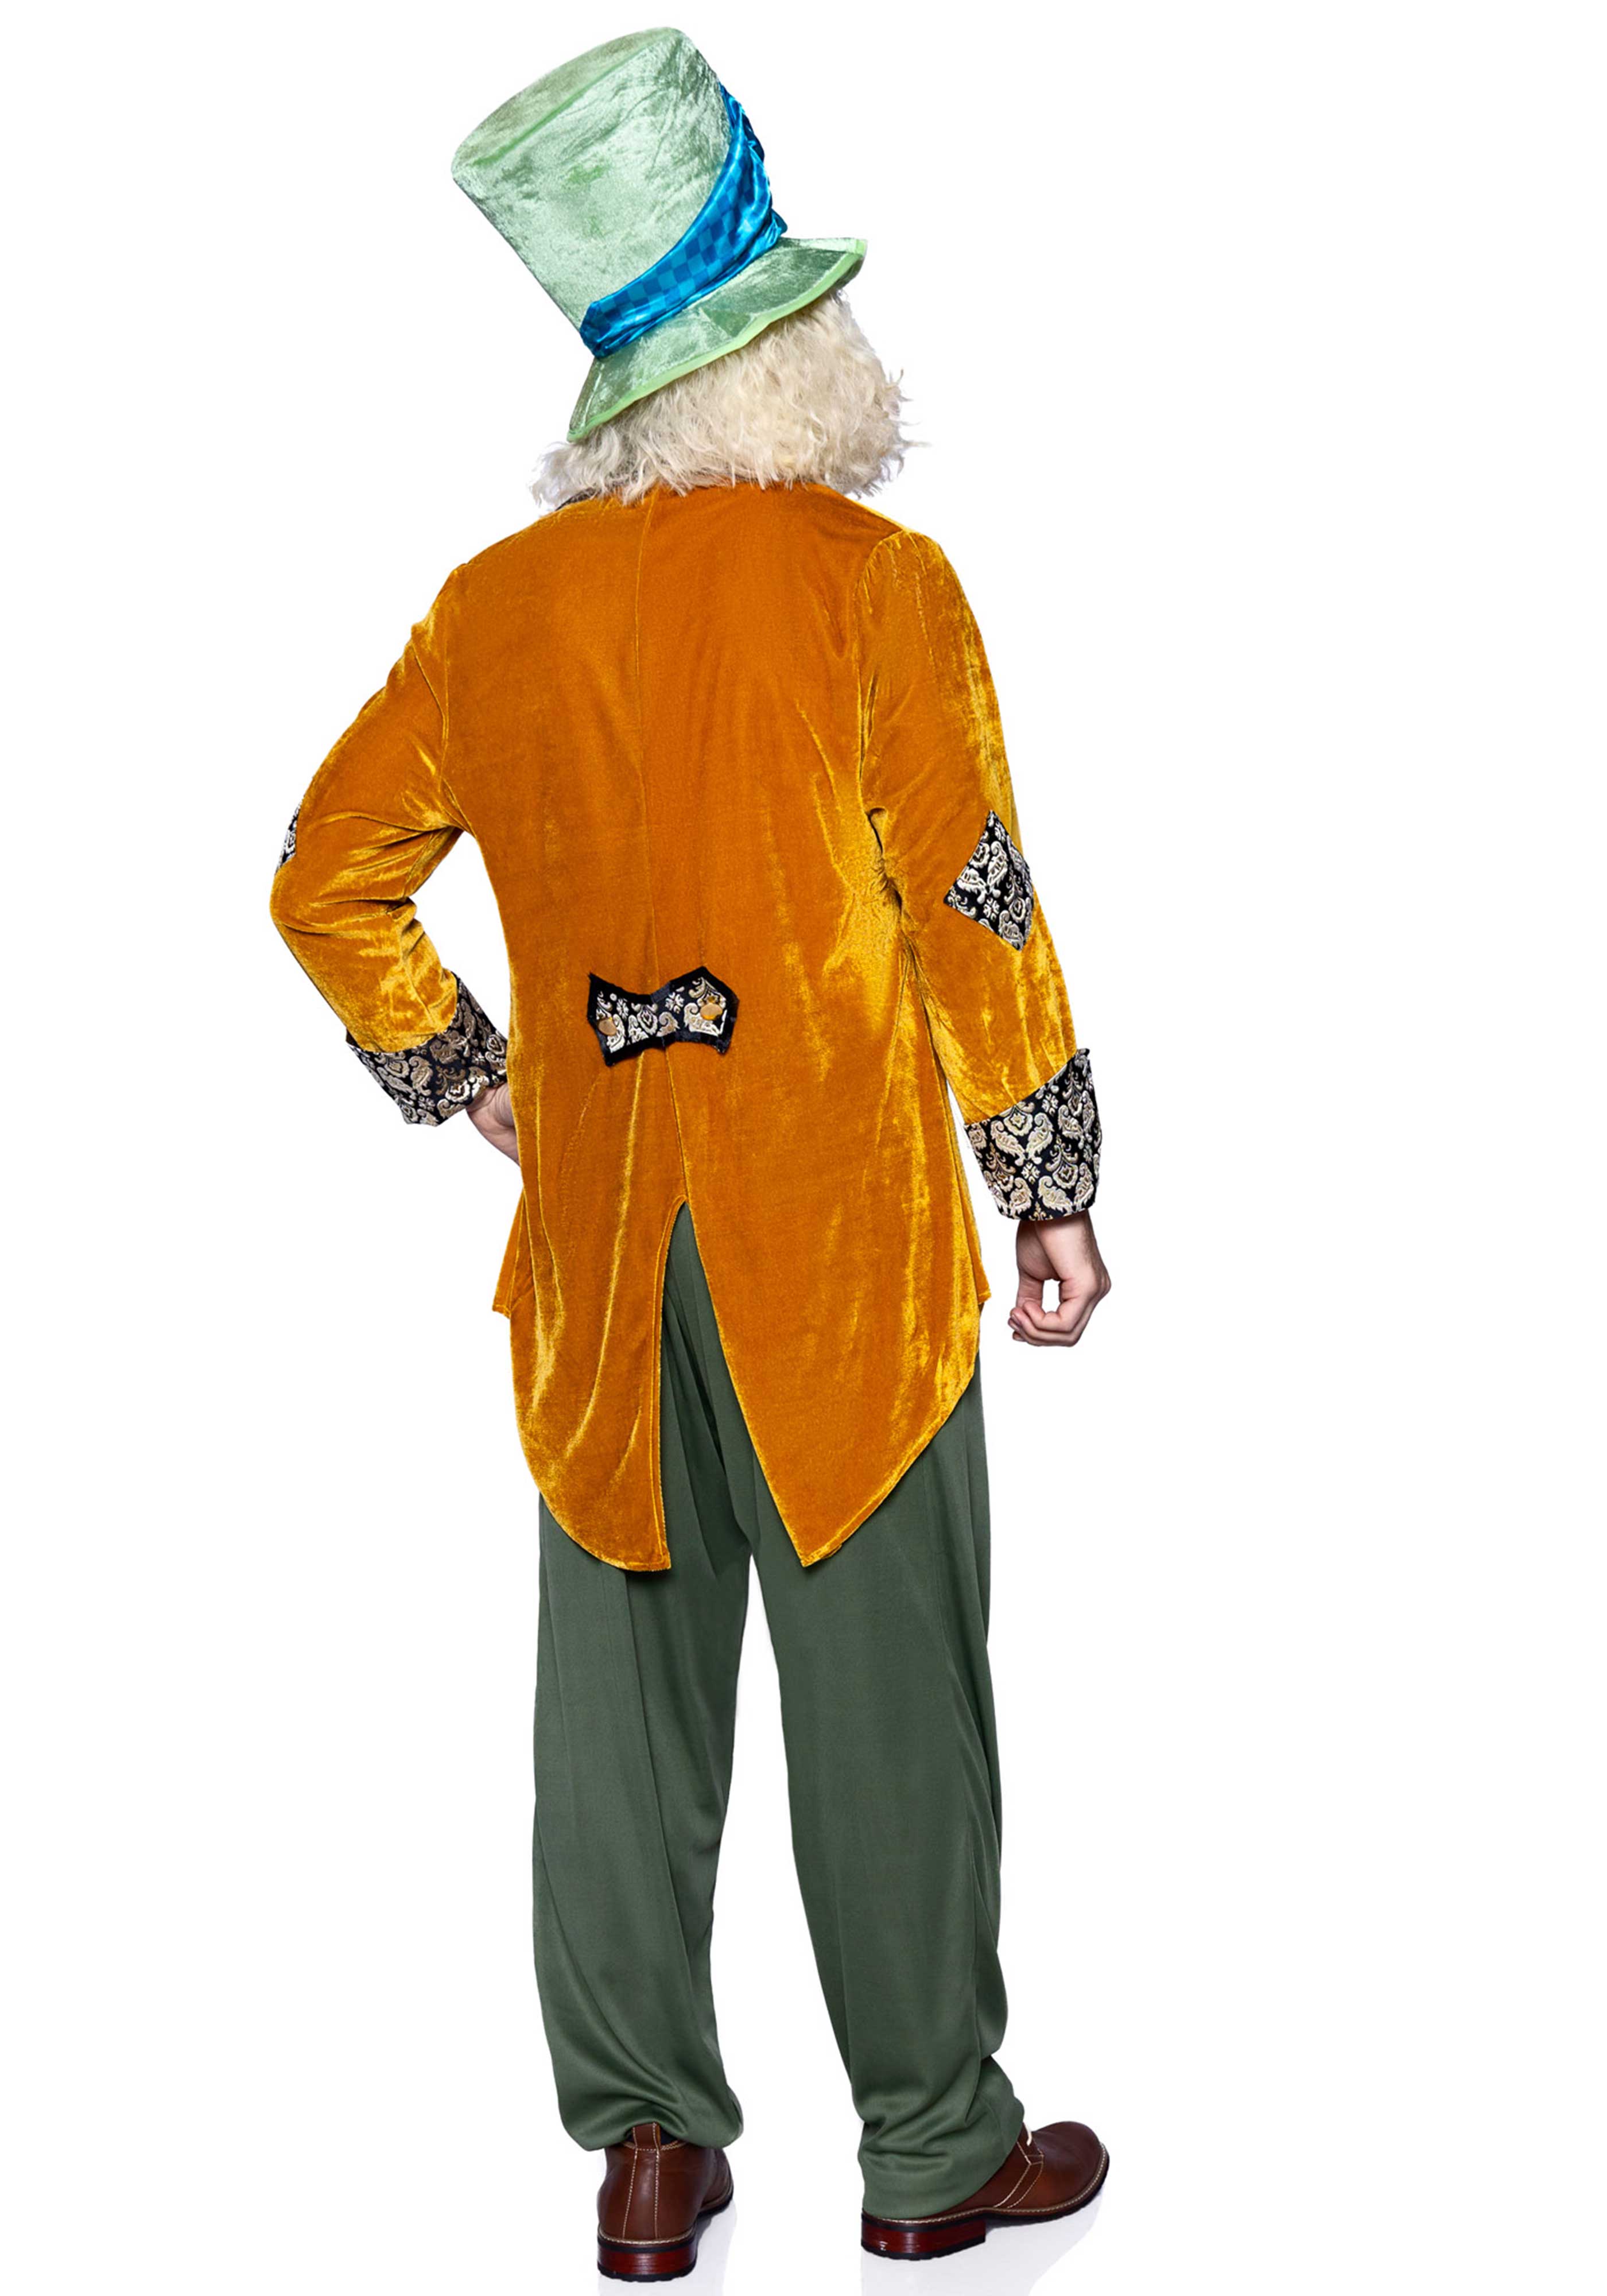 Mad Hatter costume for men